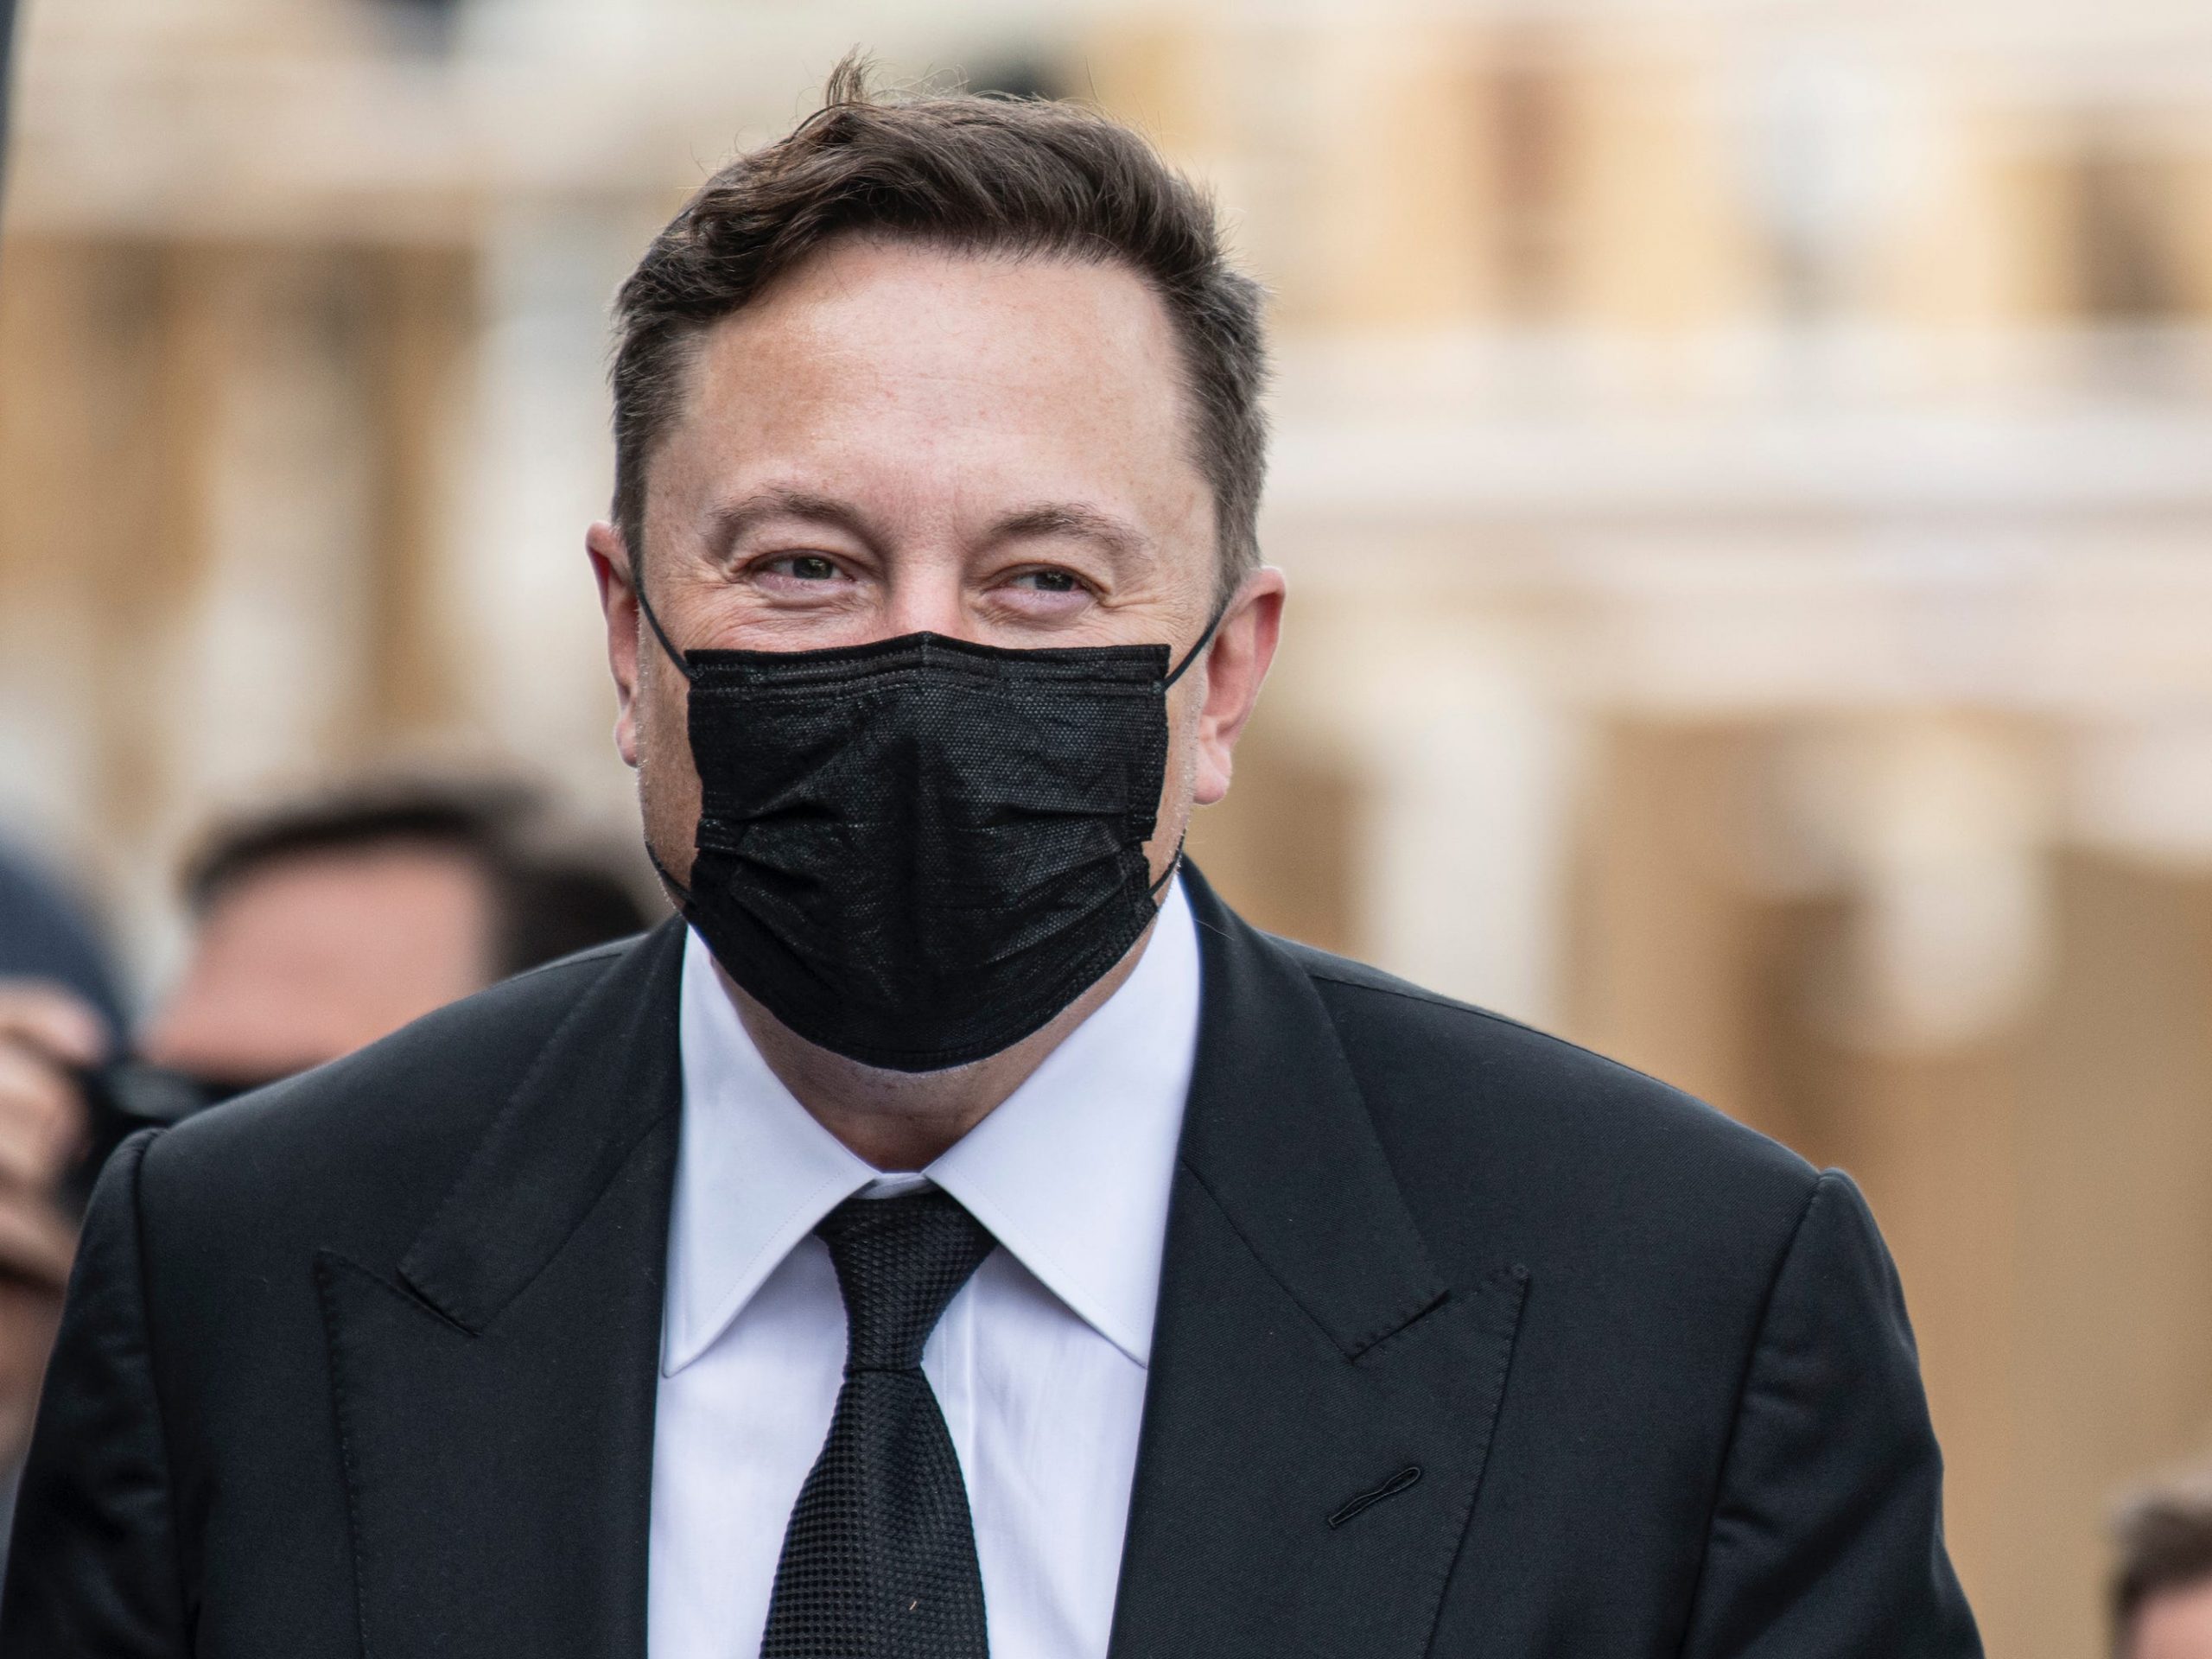 Elon Musk wears a mask.